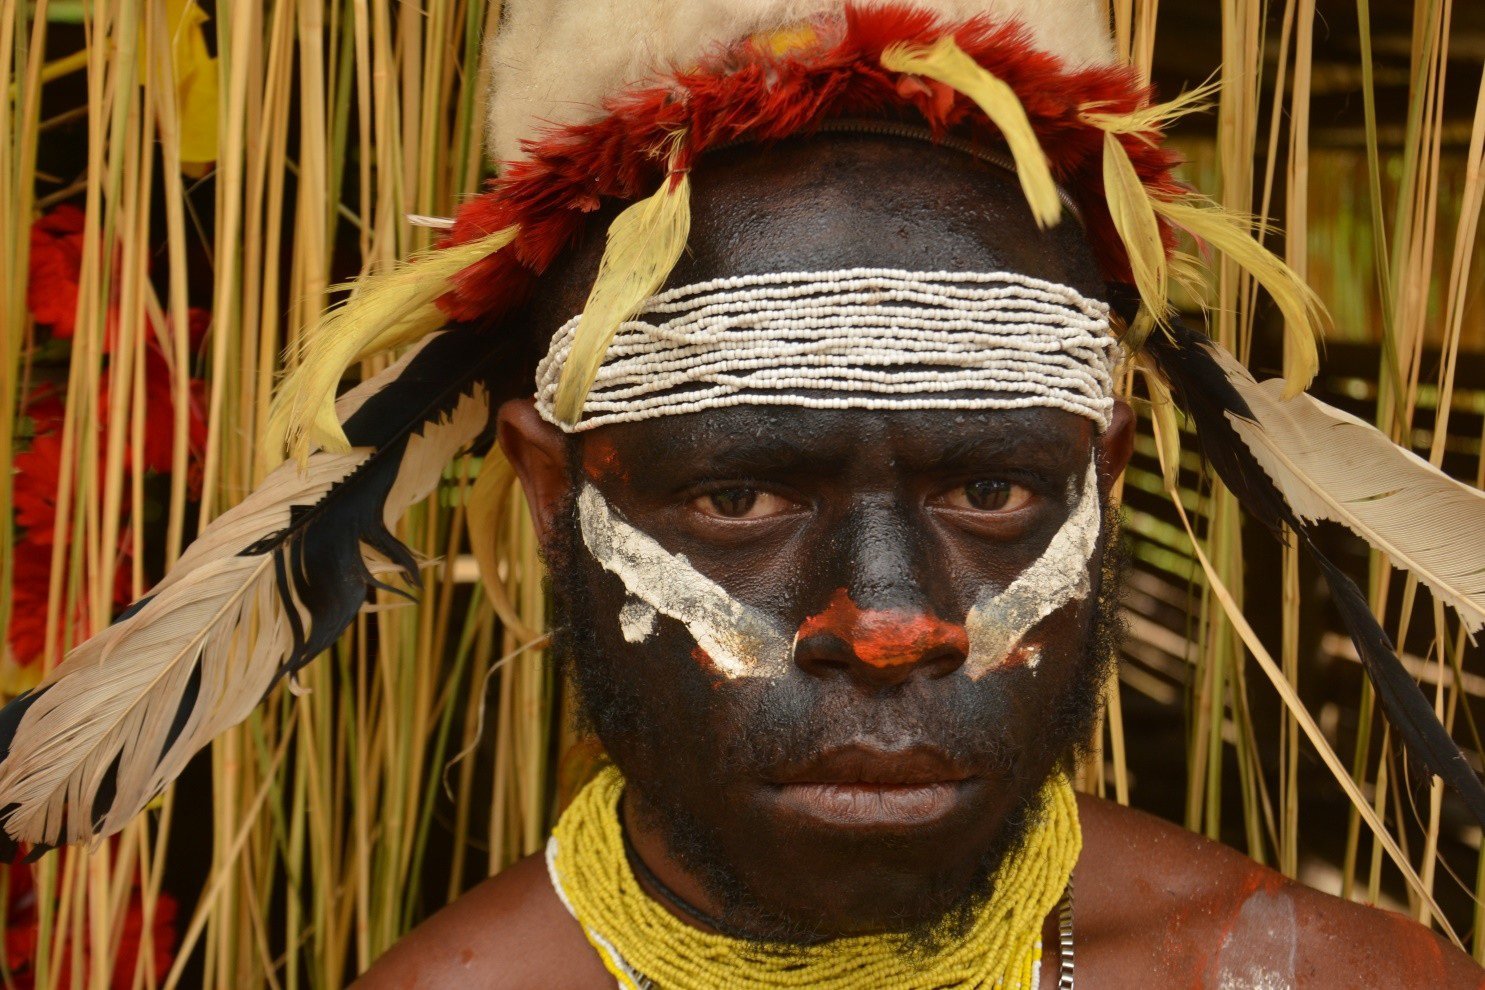 Multimediashow über Papua Neuguinea / Urheber: Norbert Weisser